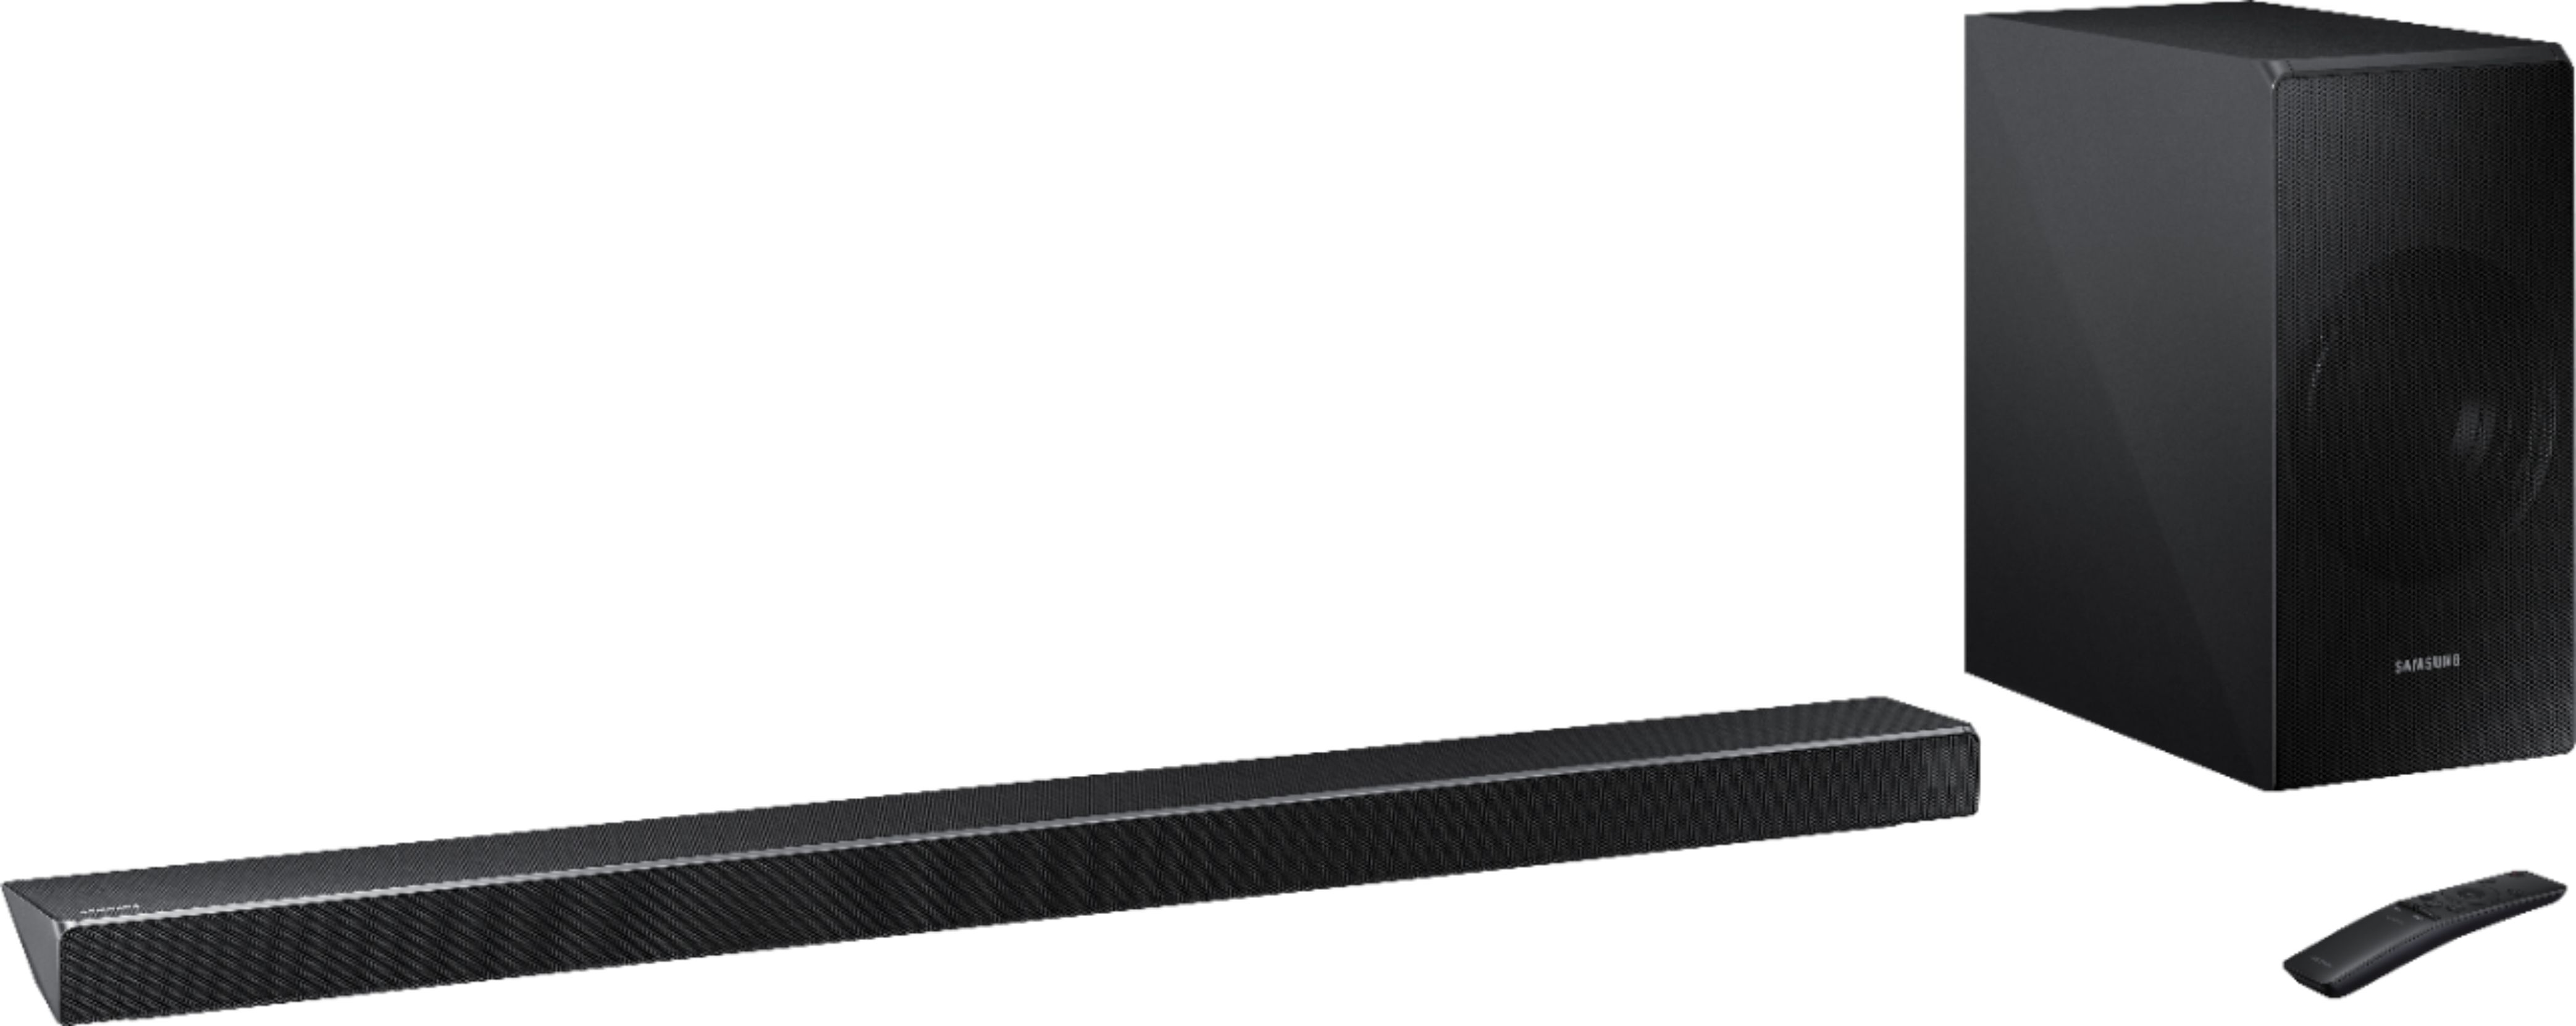 Cilia Parameters cassette Best Buy: Samsung 5.1-Channel Soundbar System with 6-1/2" Wireless  Subwoofer and Digital Amplifier Charcoal Black HW-N650/ZA